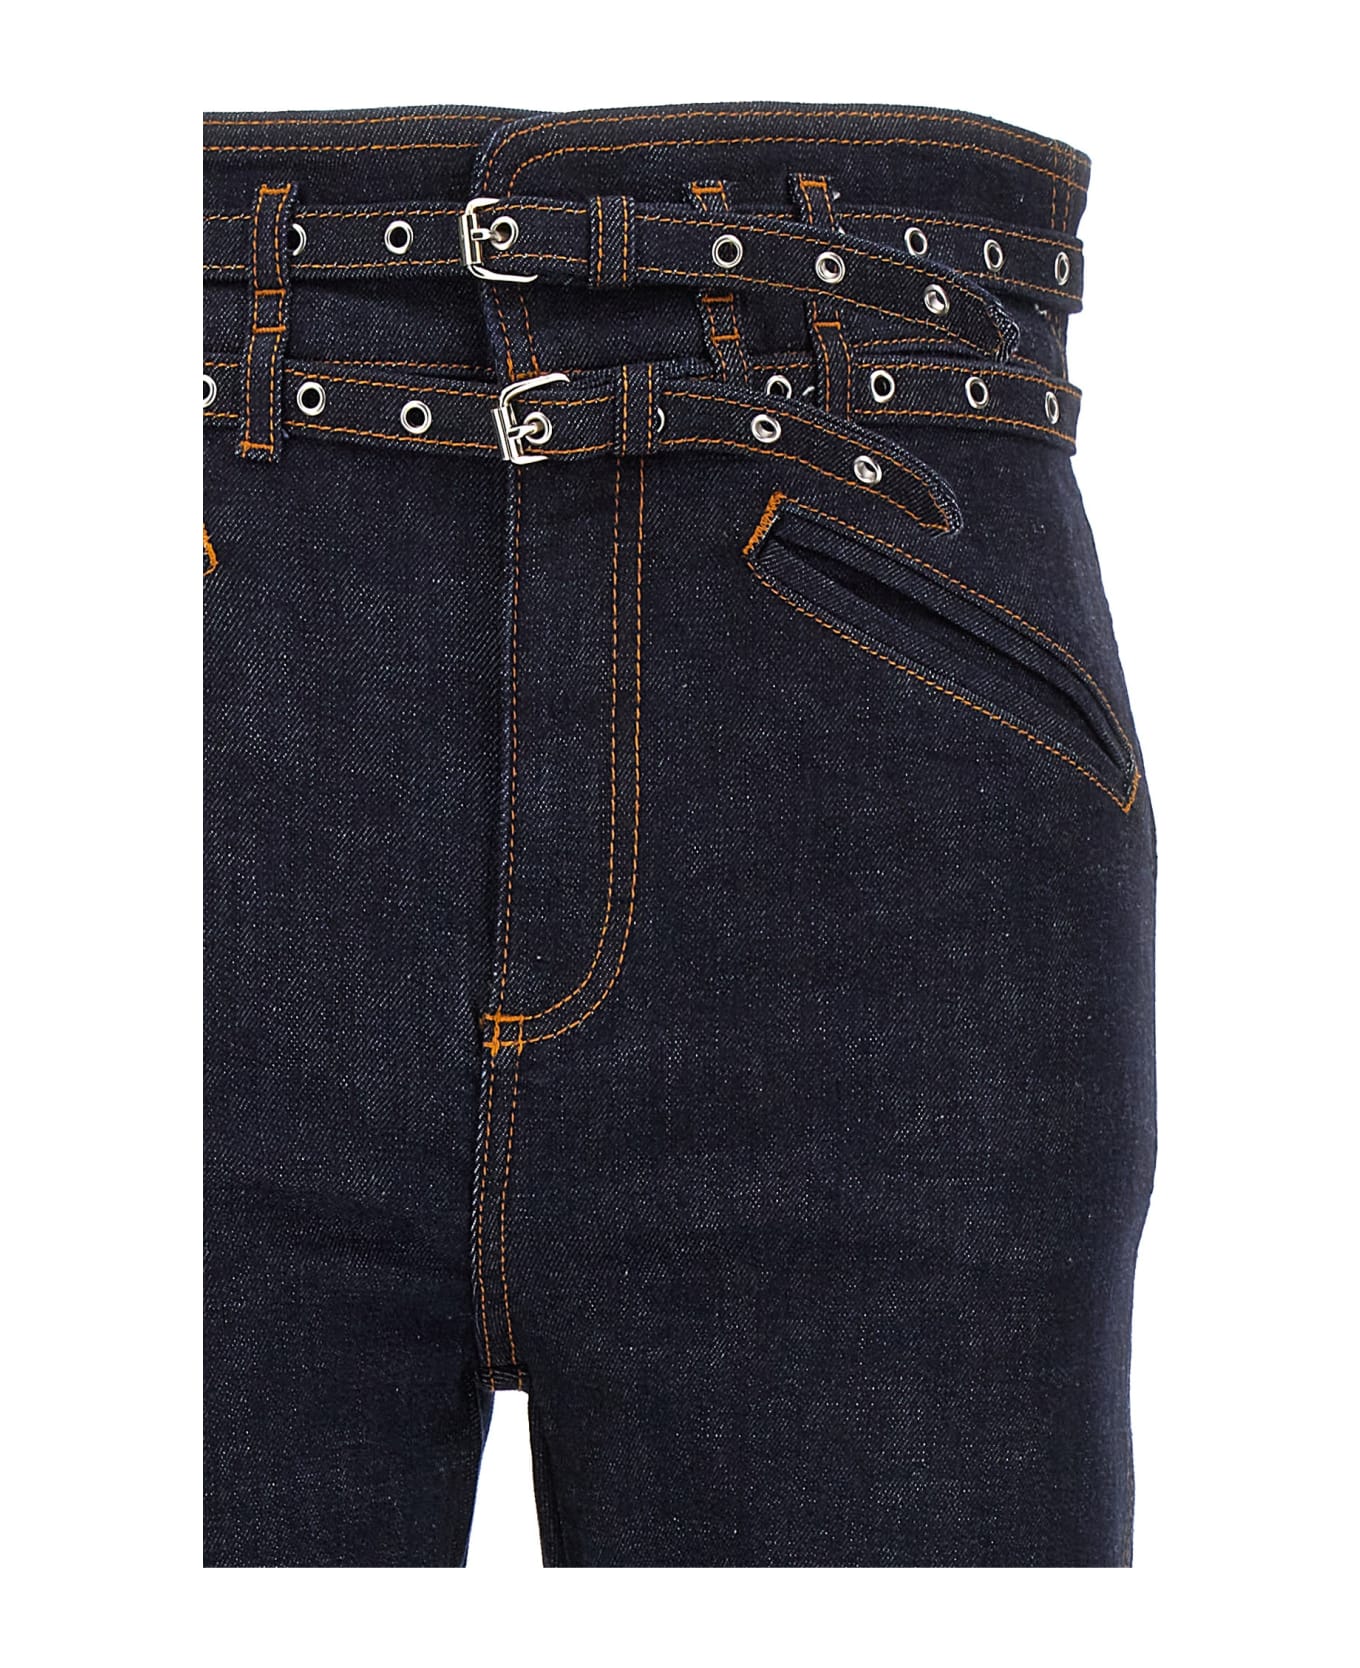 Philosophy di Lorenzo Serafini Double Belt Detail Jeans - Blue